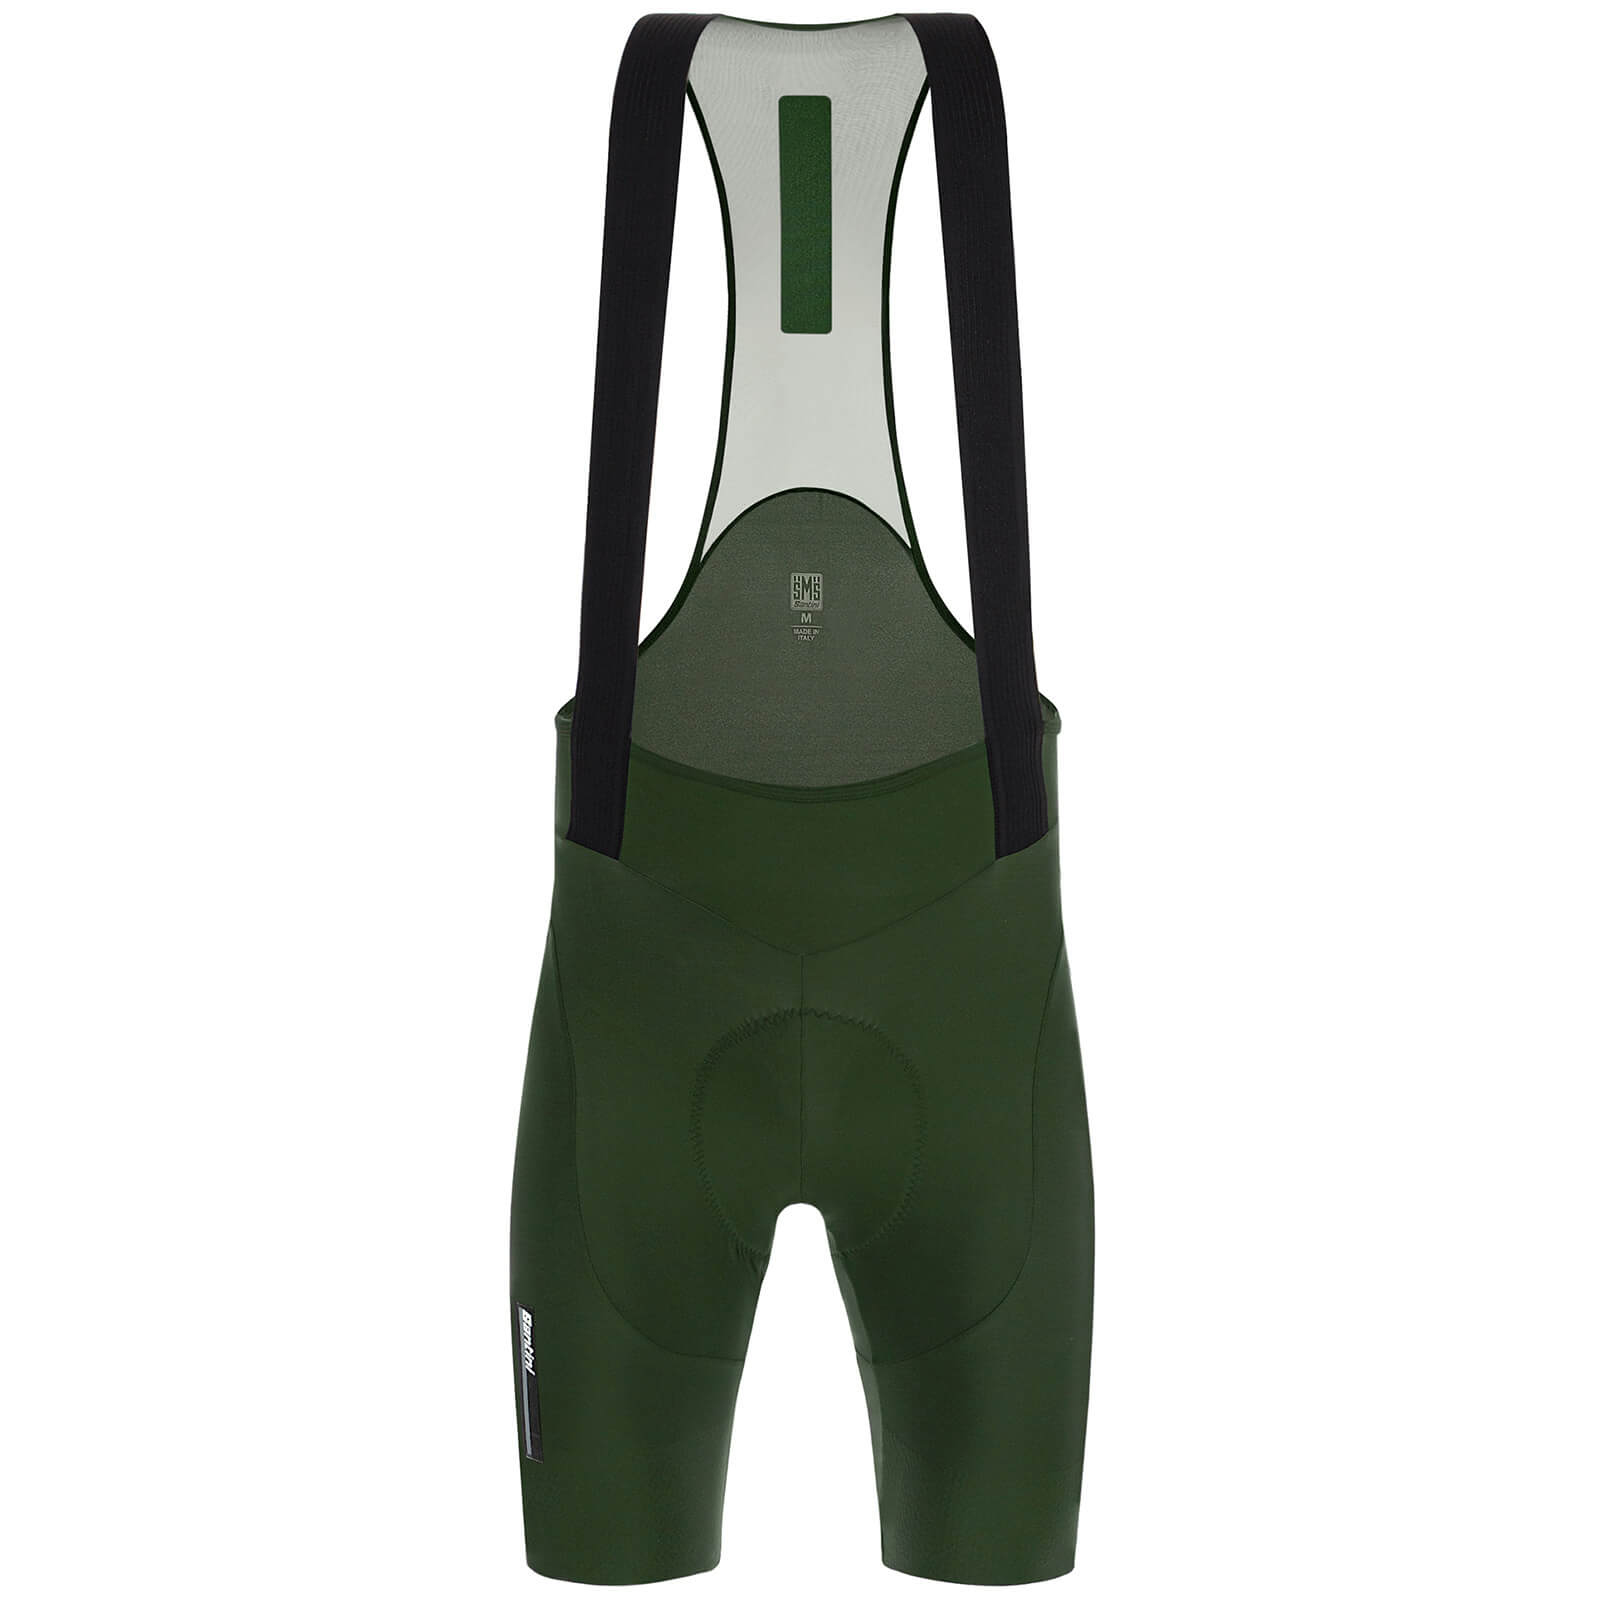 Santini Tono Dinamo Bib Shorts - XXL - Military Green